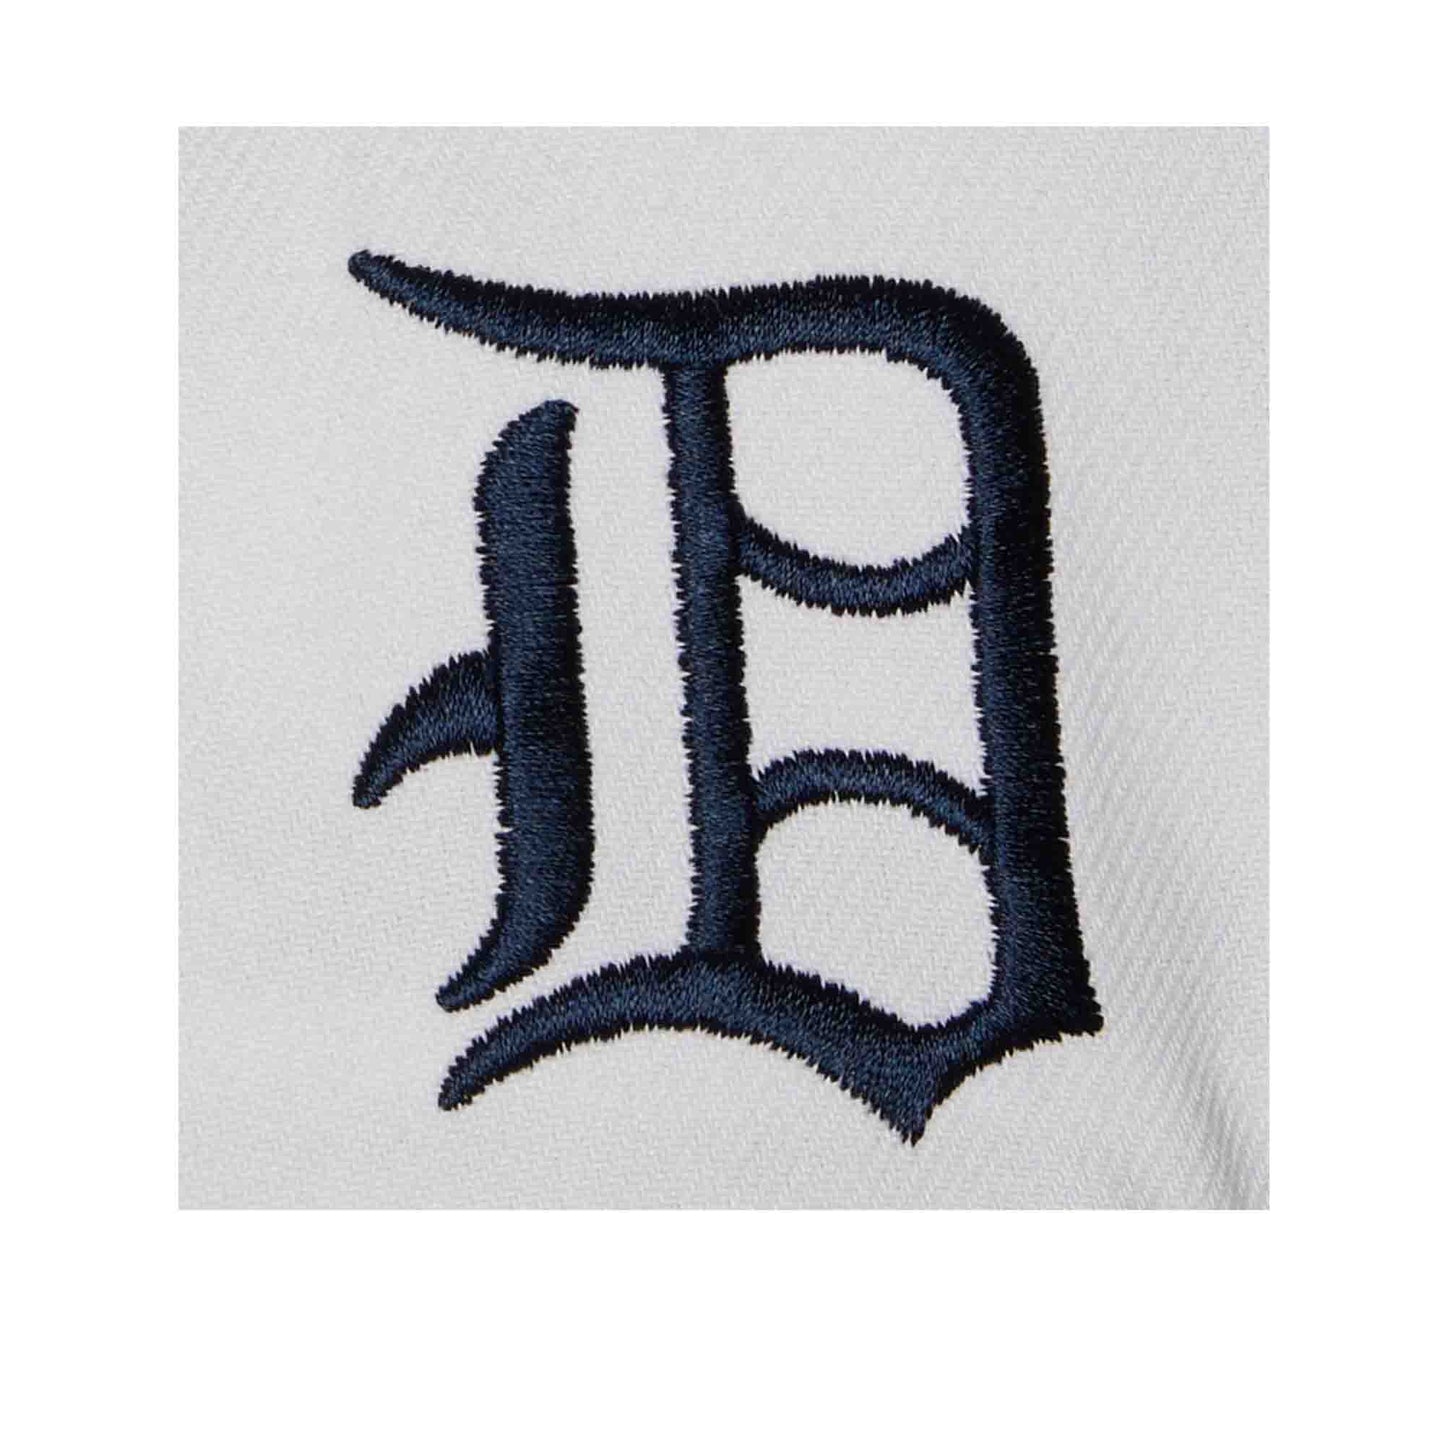 MLB Evergreen Pro Snapback Coop Detroit Tigers